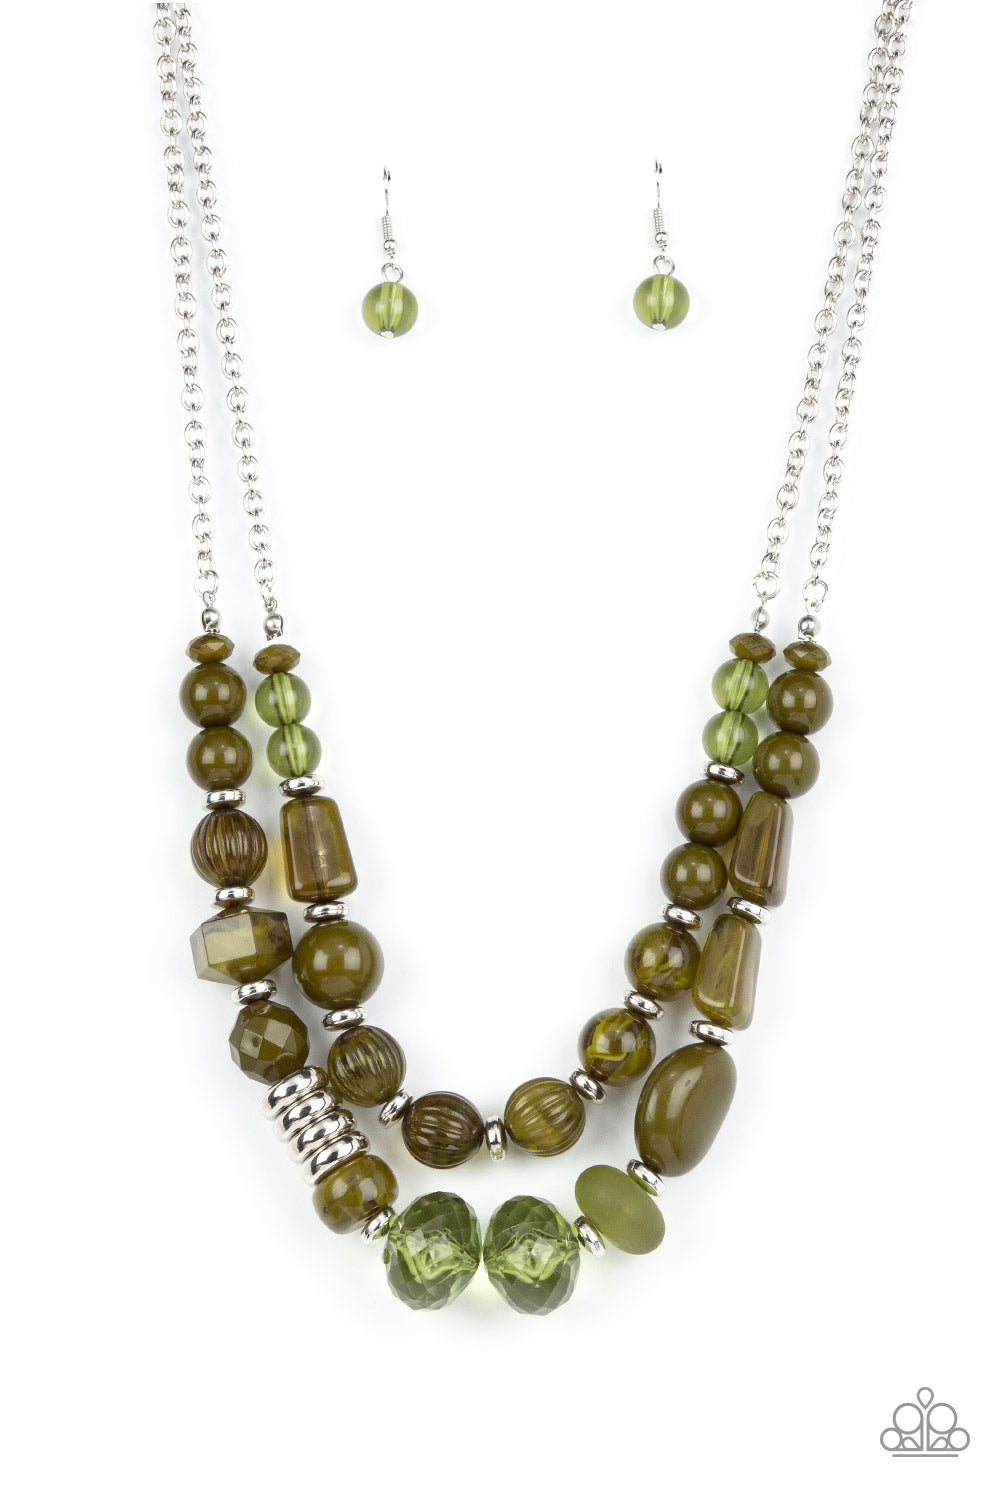 Pina Colada Paradise - Green Necklace freeshipping - JewLz4u Gemstone Gallery